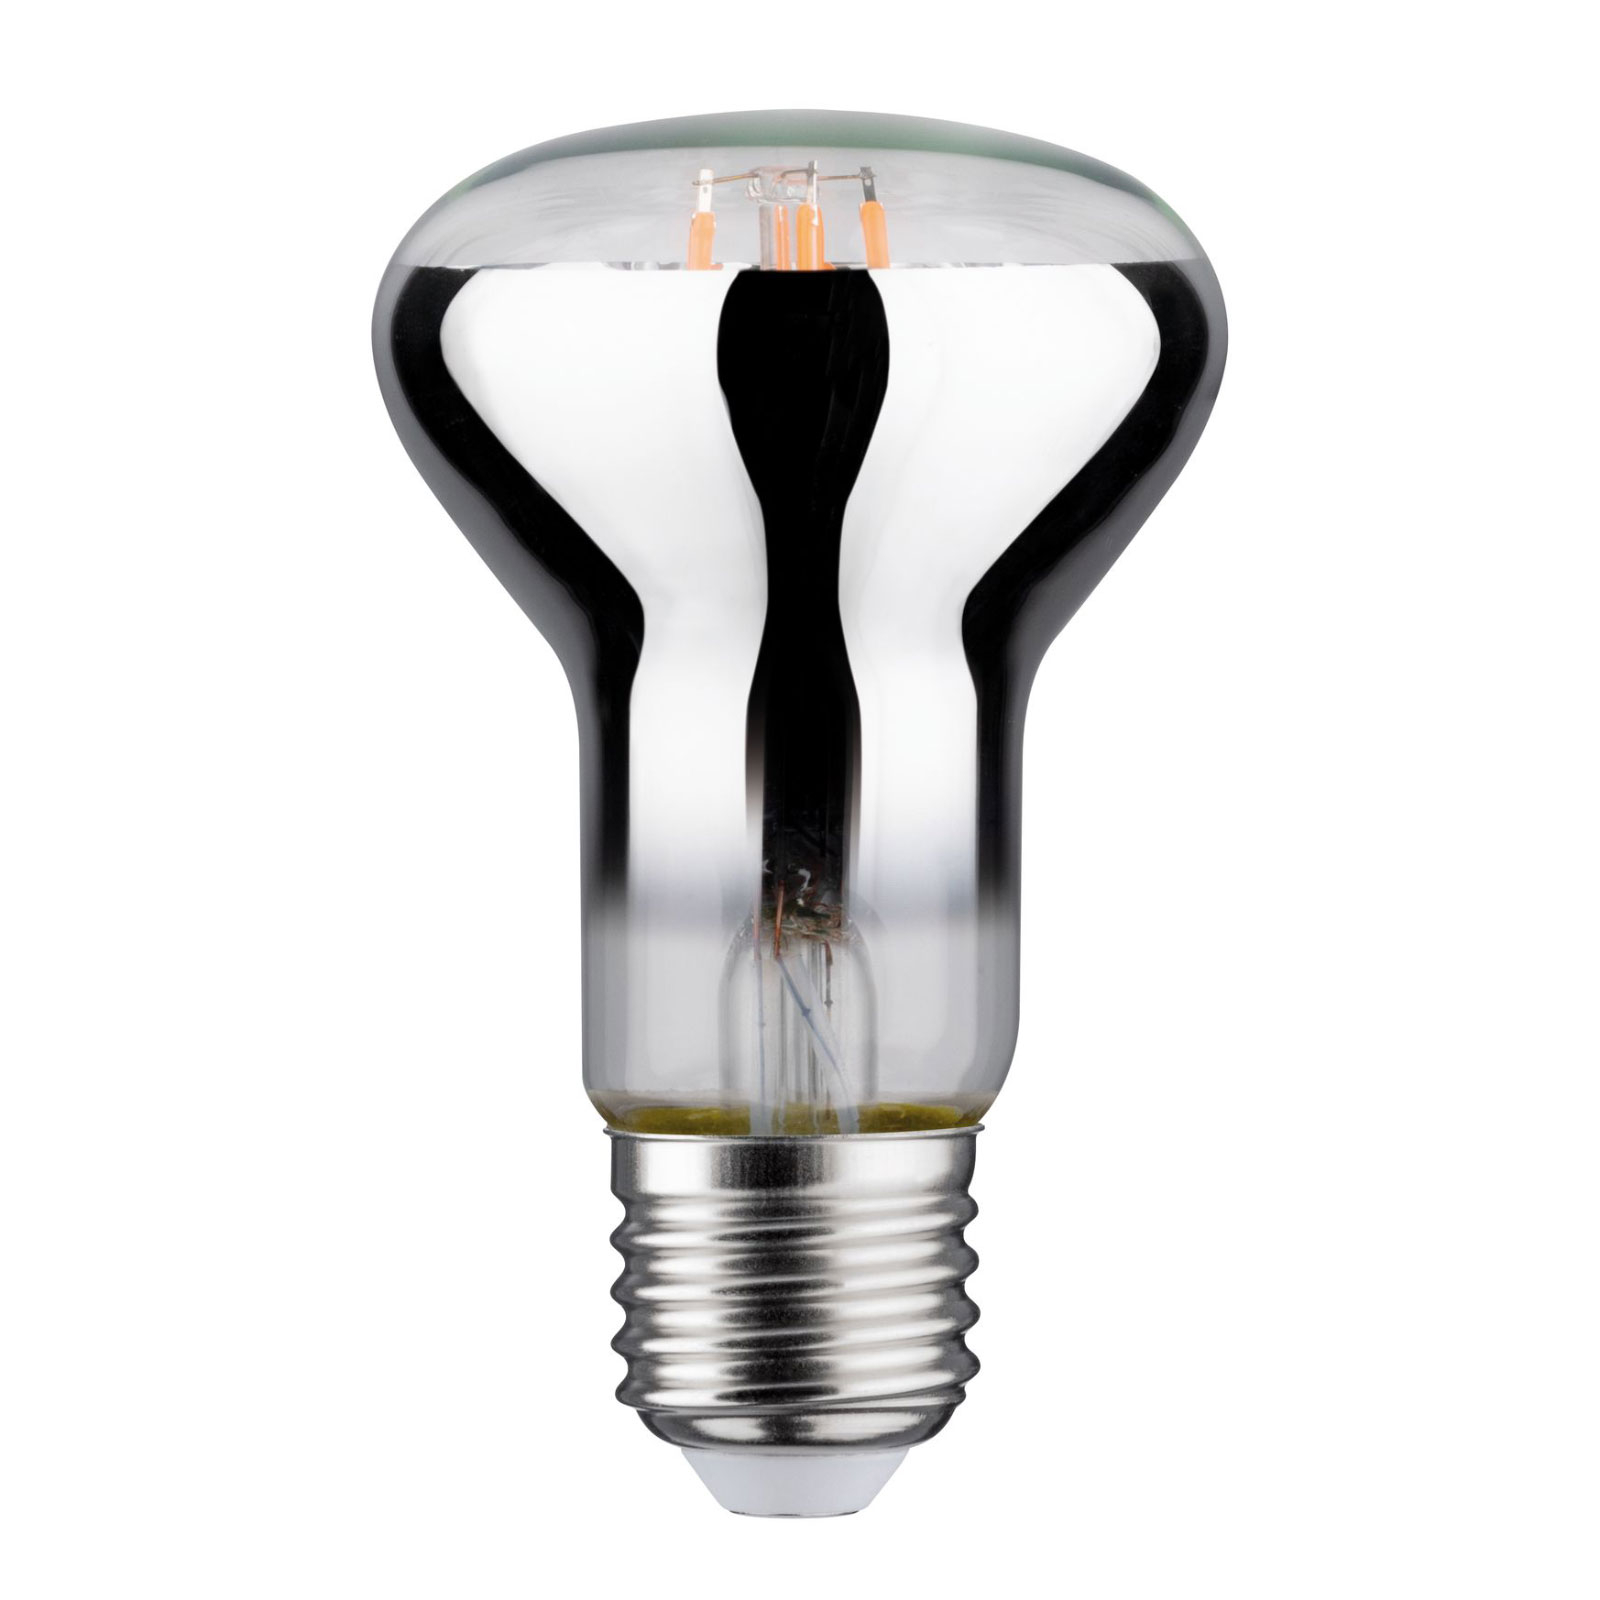 Geurig kern Inademen LED planten lamp E27 R63 6,5W | Lampen24.nl